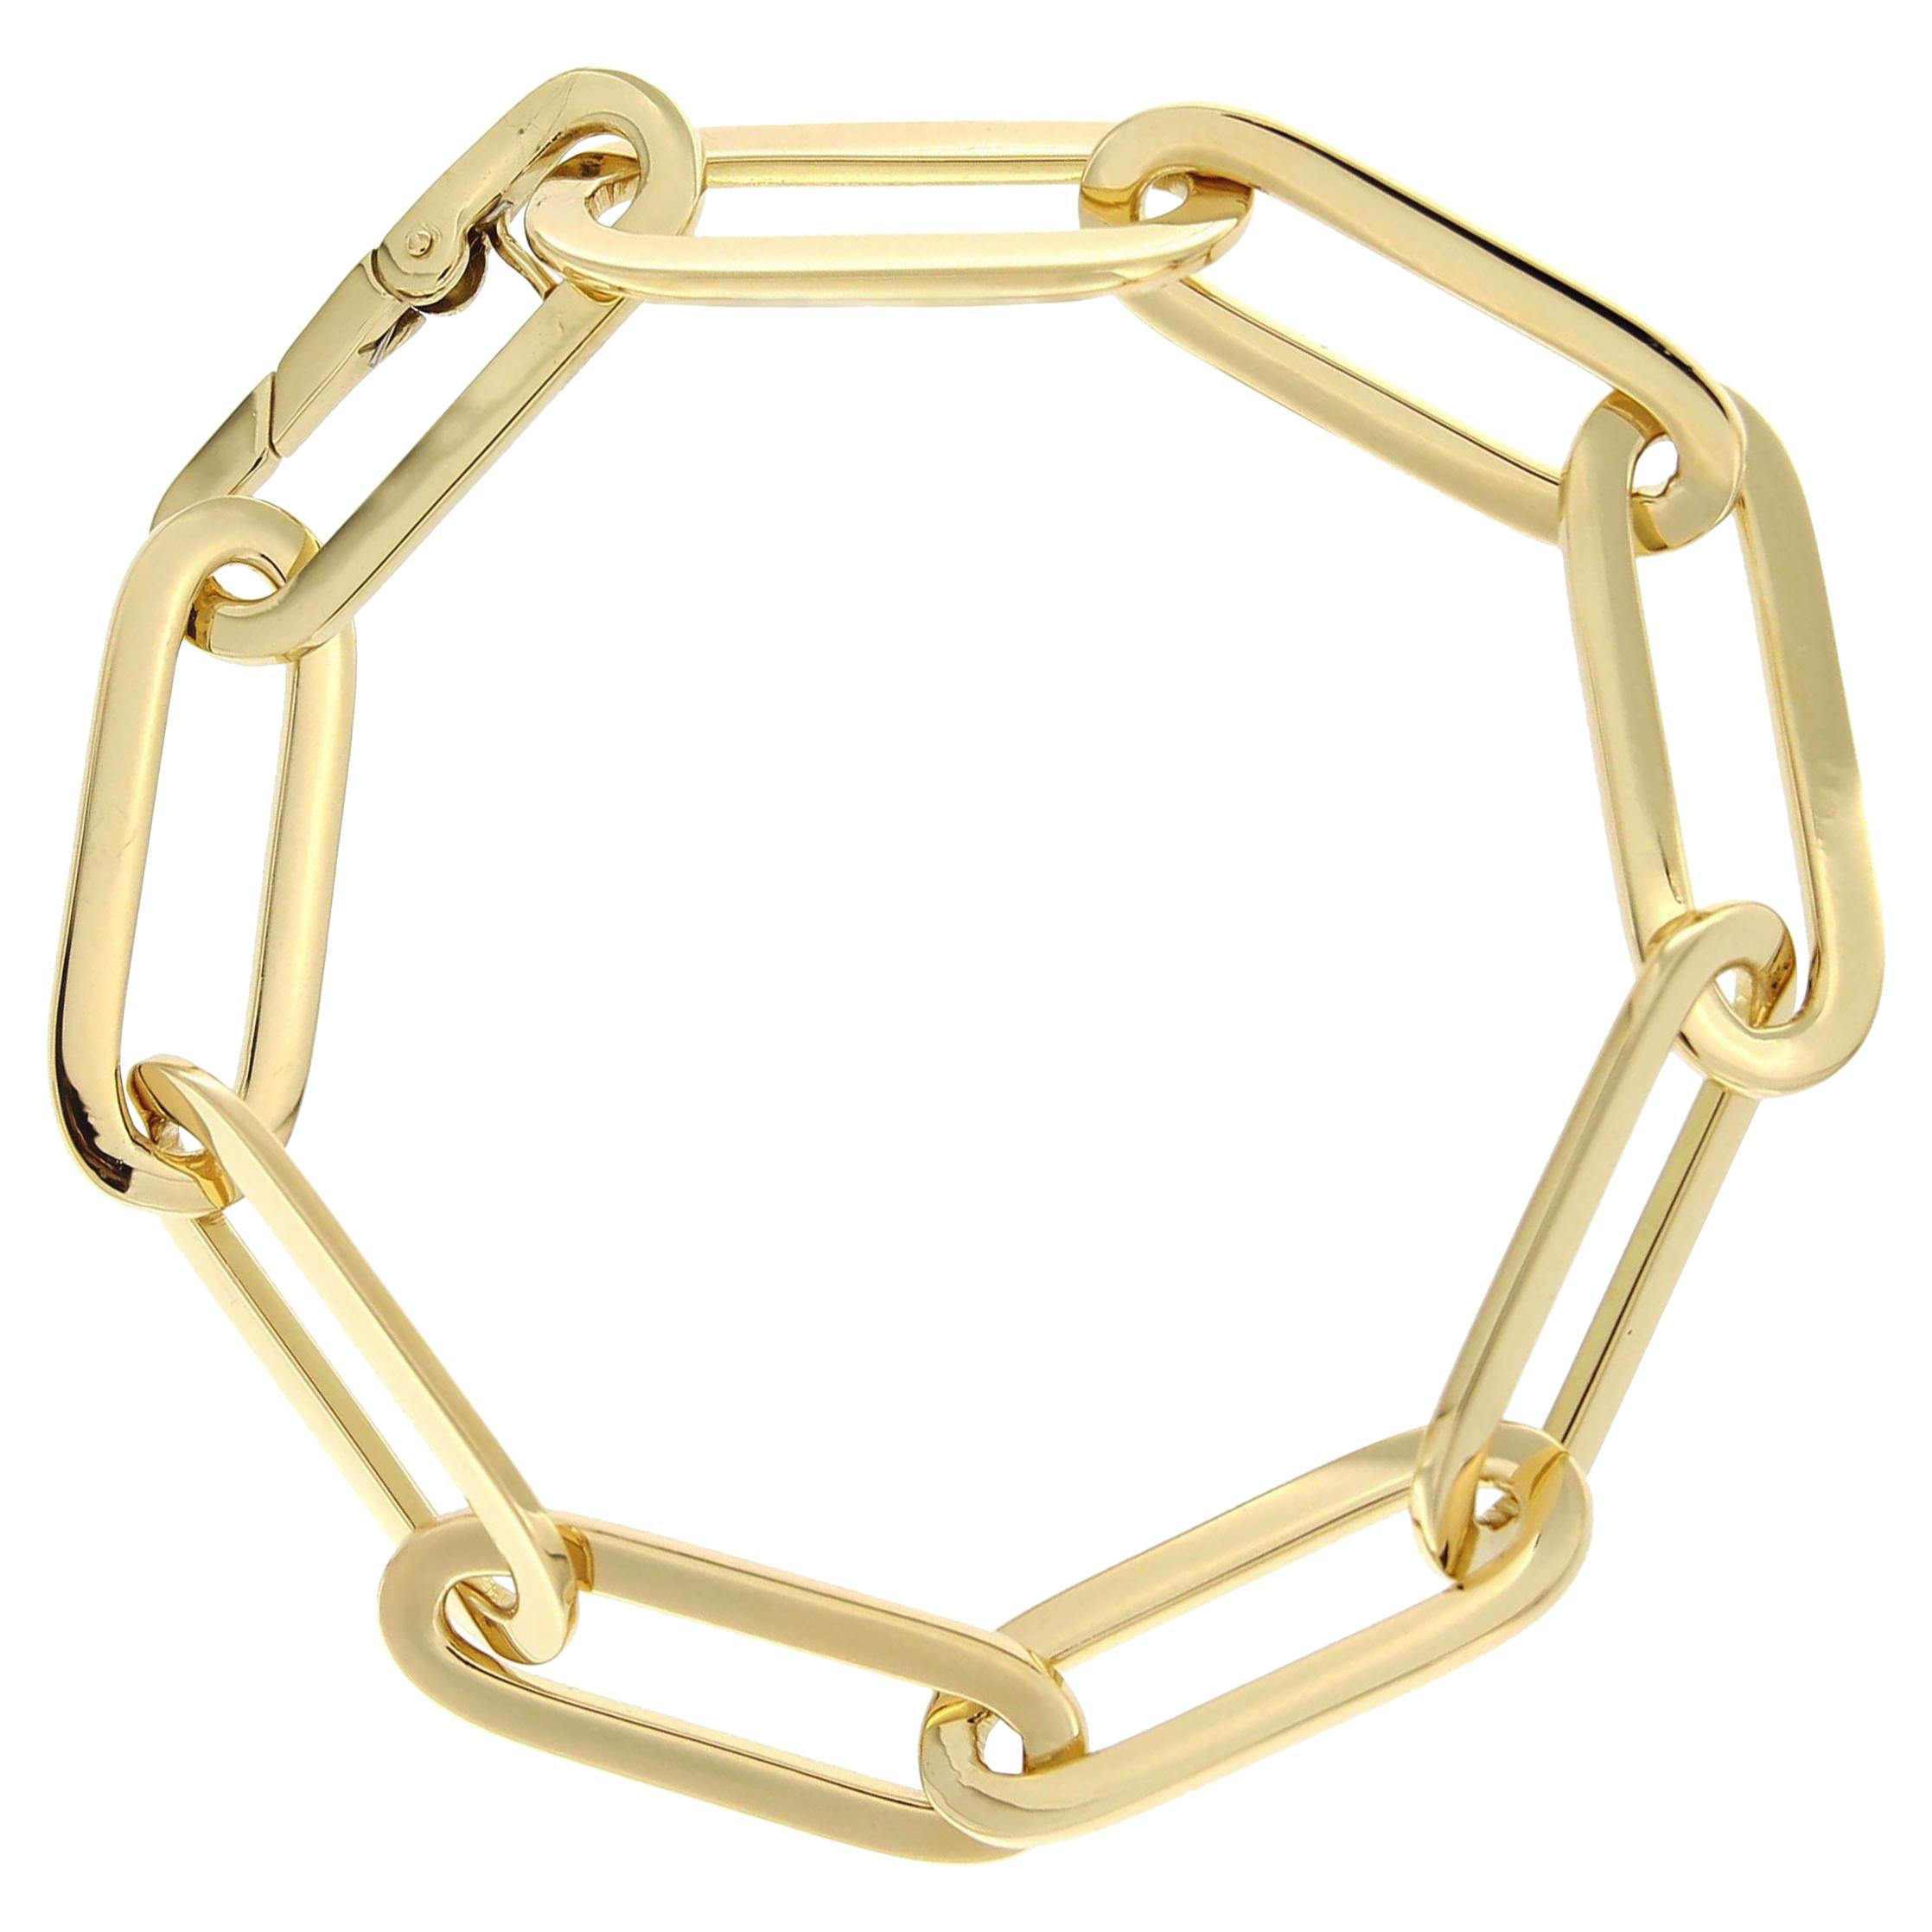 Alex Jona 18 Karat Yellow Gold Link Chain Bracelet